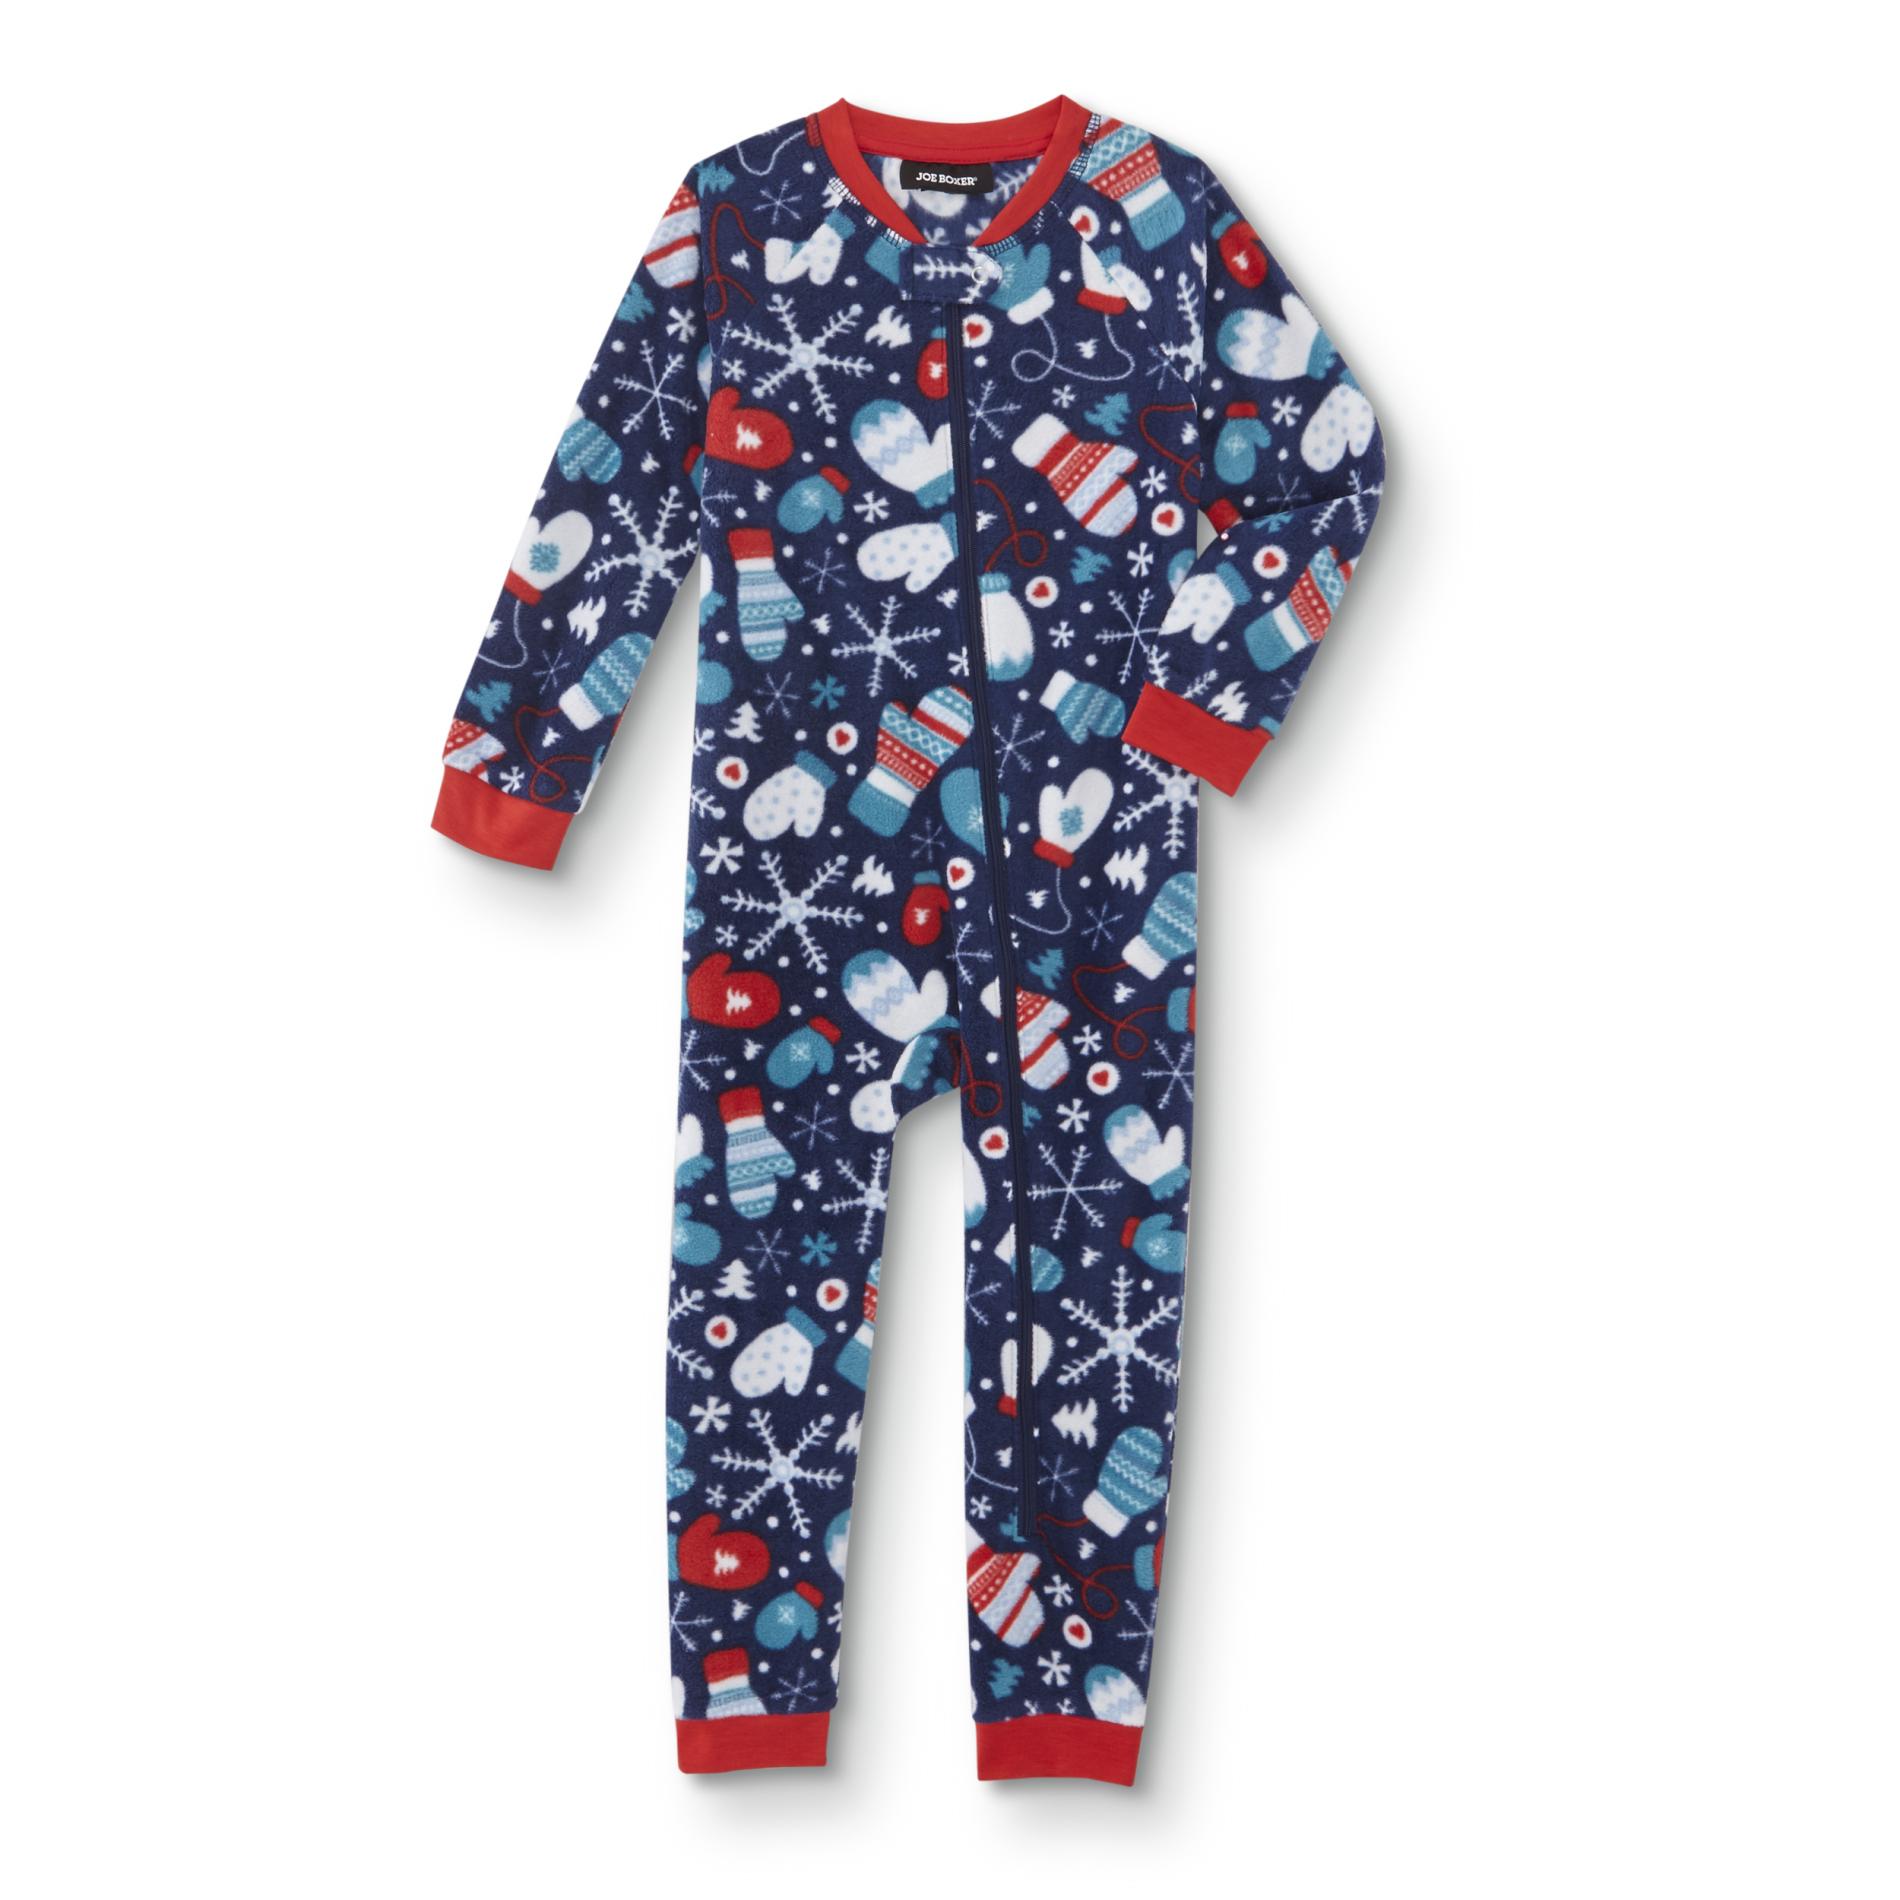 Joe Boxer Infant &Toddler Boys' One-Piece Pajamas - Snowflakes & Mittens